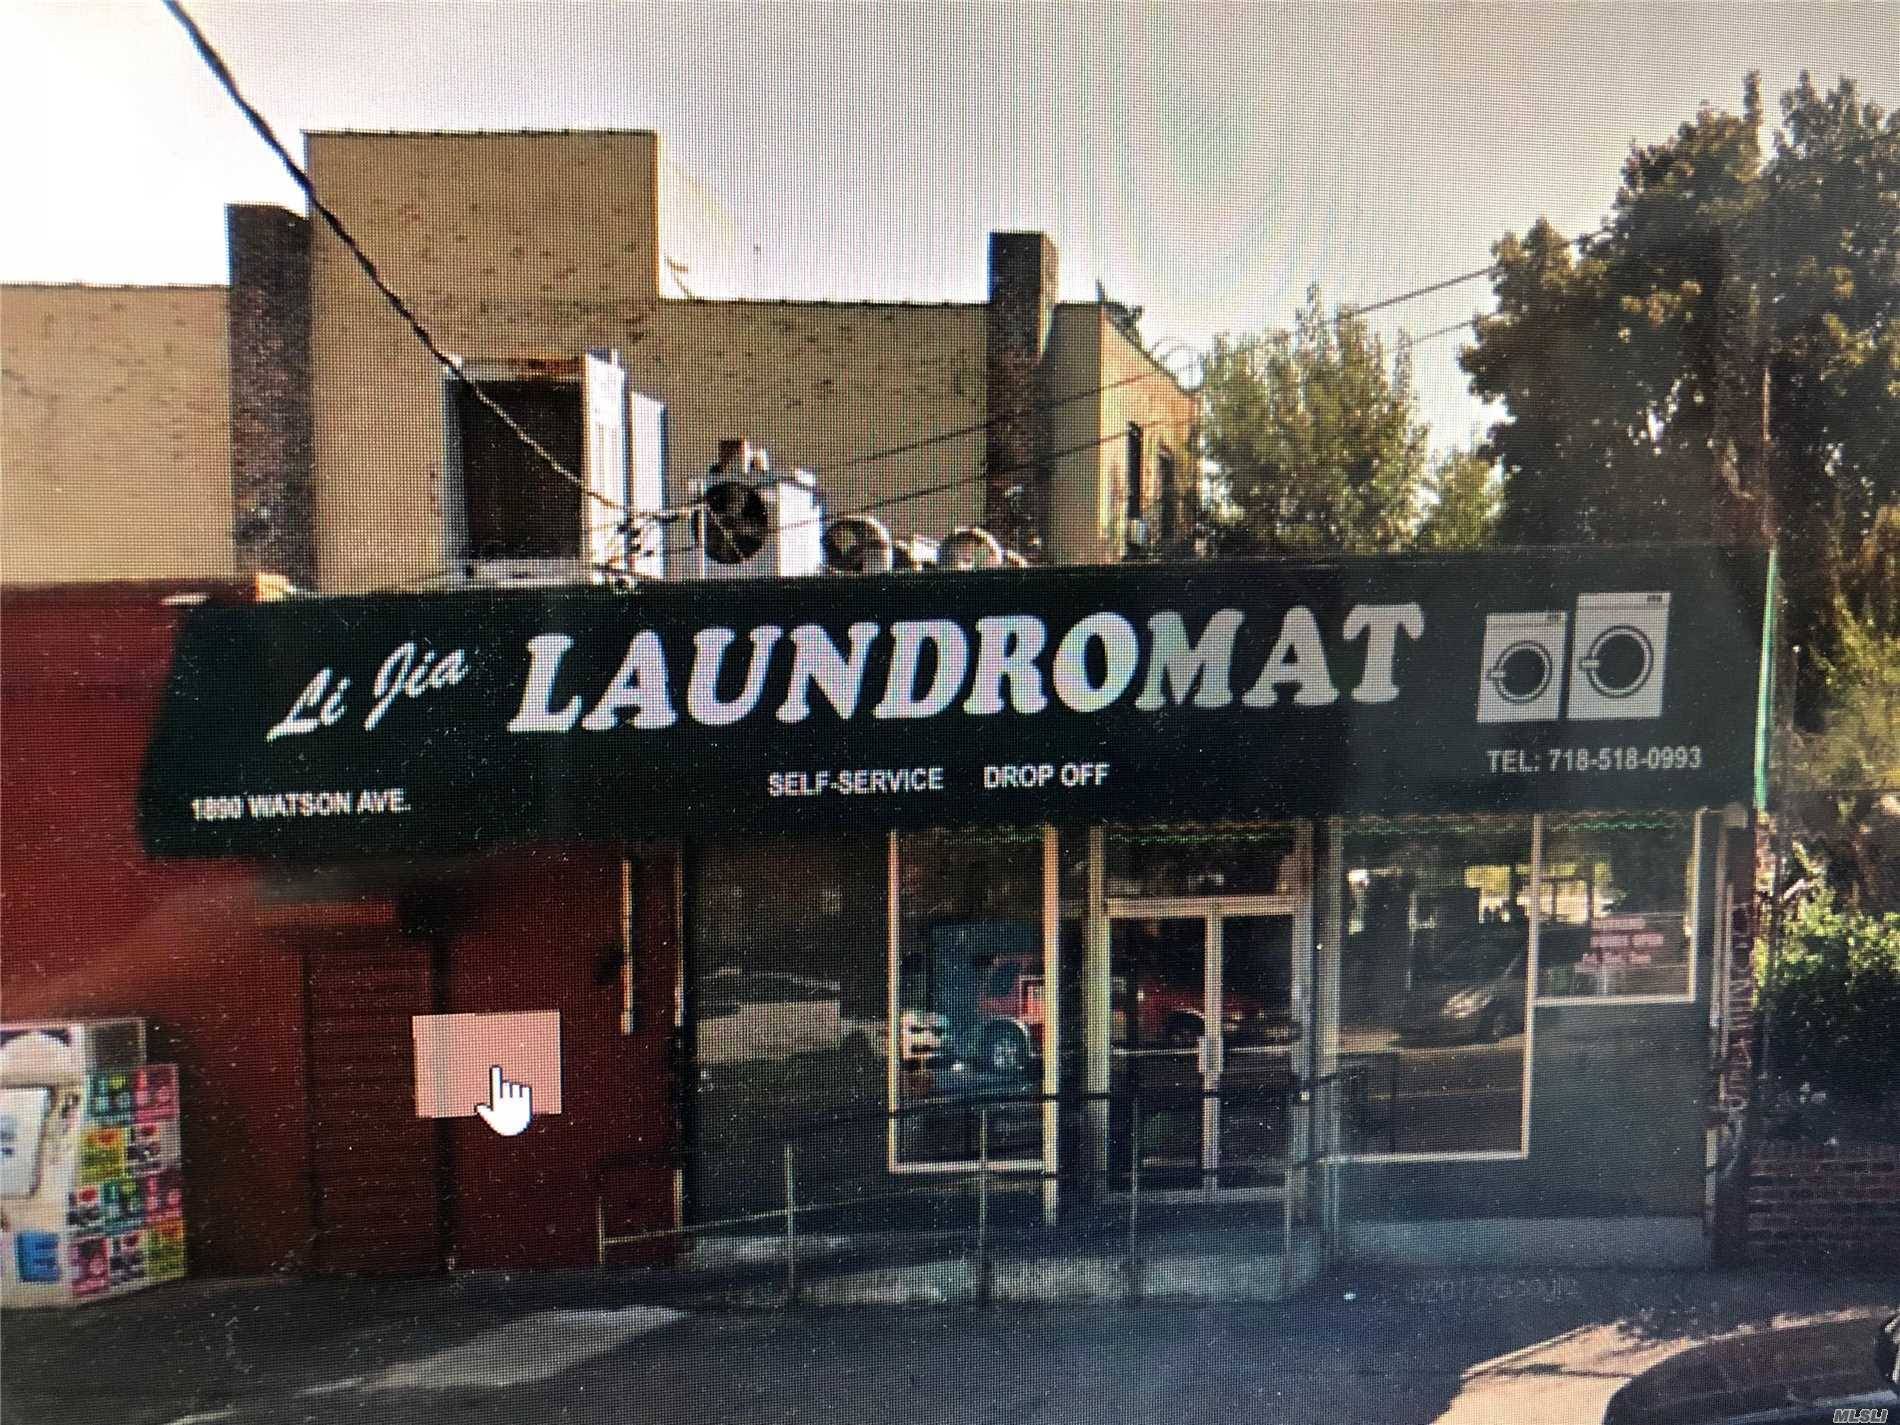 Laundromat Business For Sale.